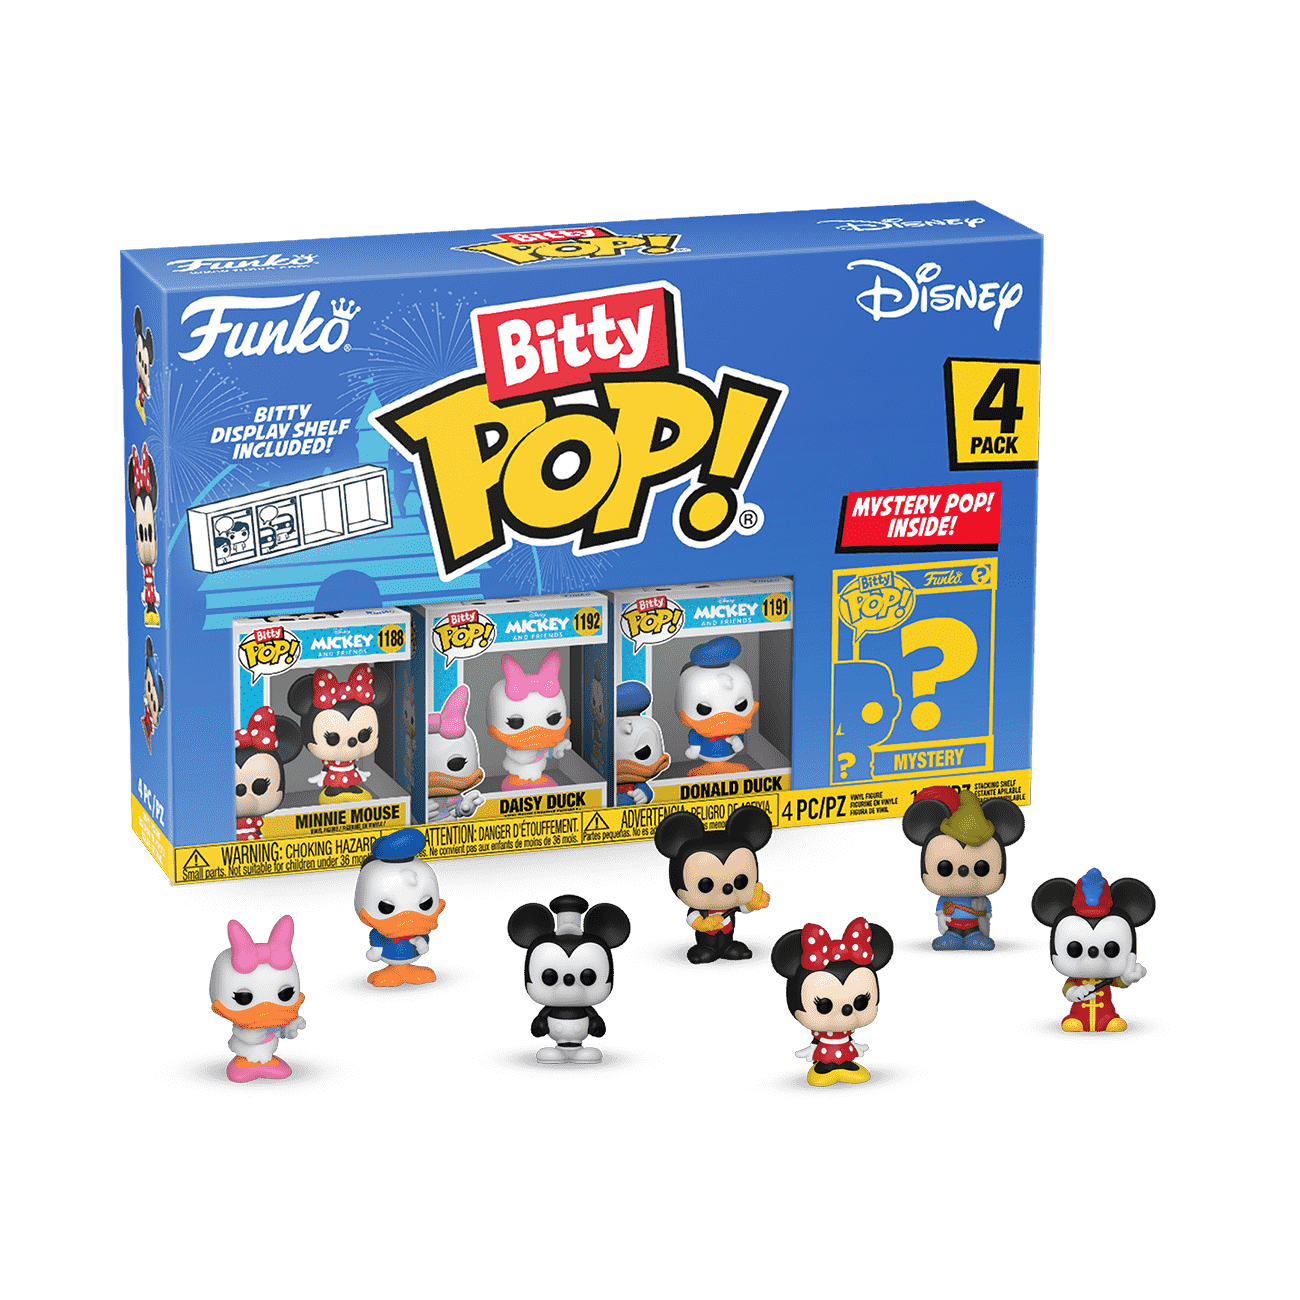 Buy Bitty Pop! Disney 4-Pack Series 2 at Funko.